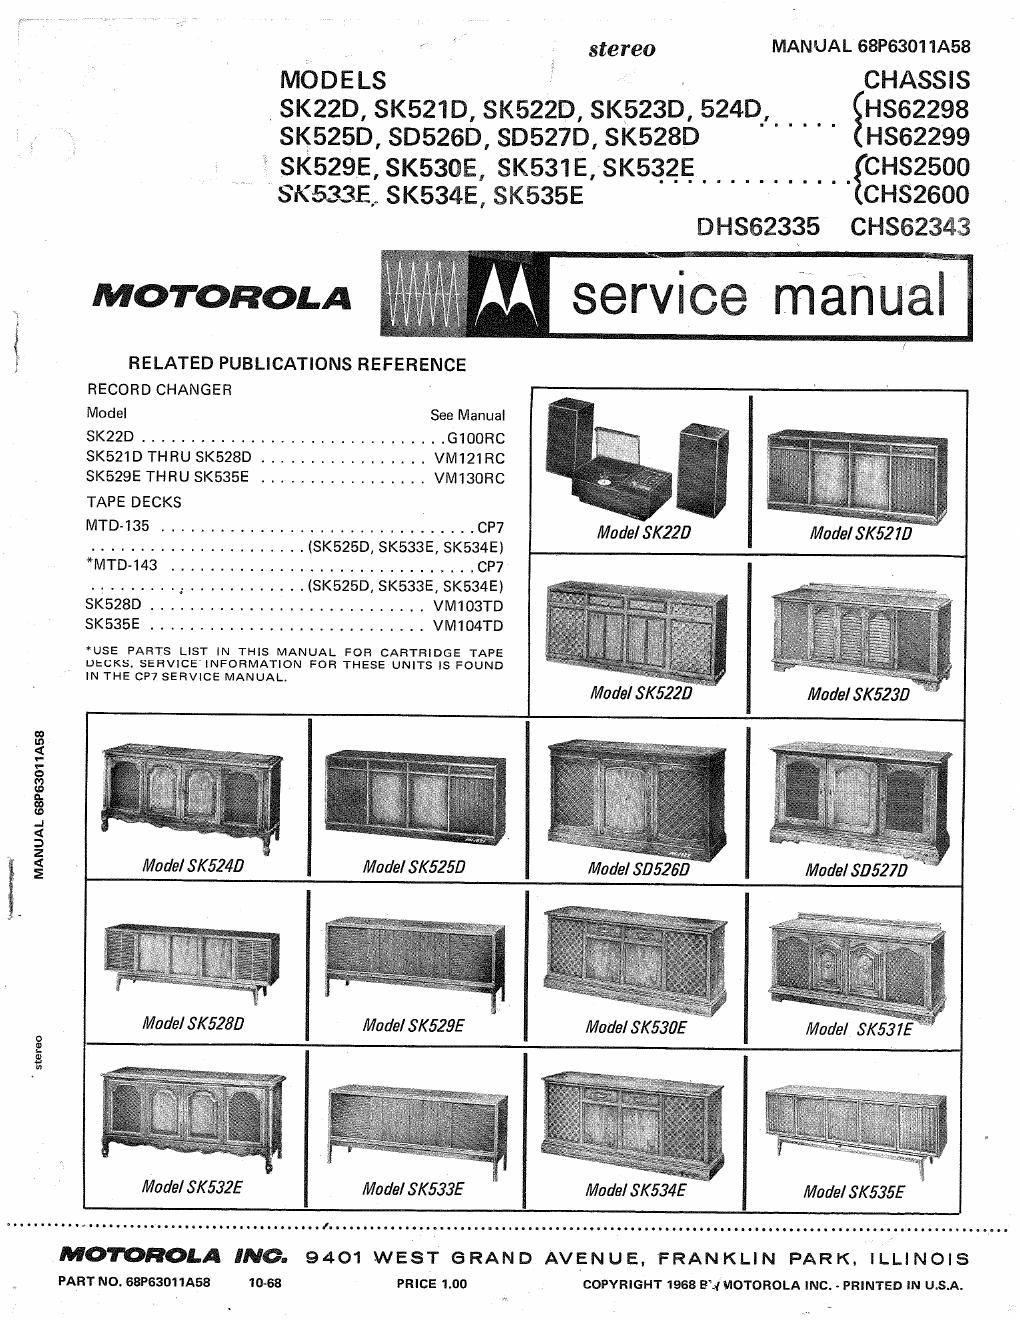 motorola sk 528 d service manual